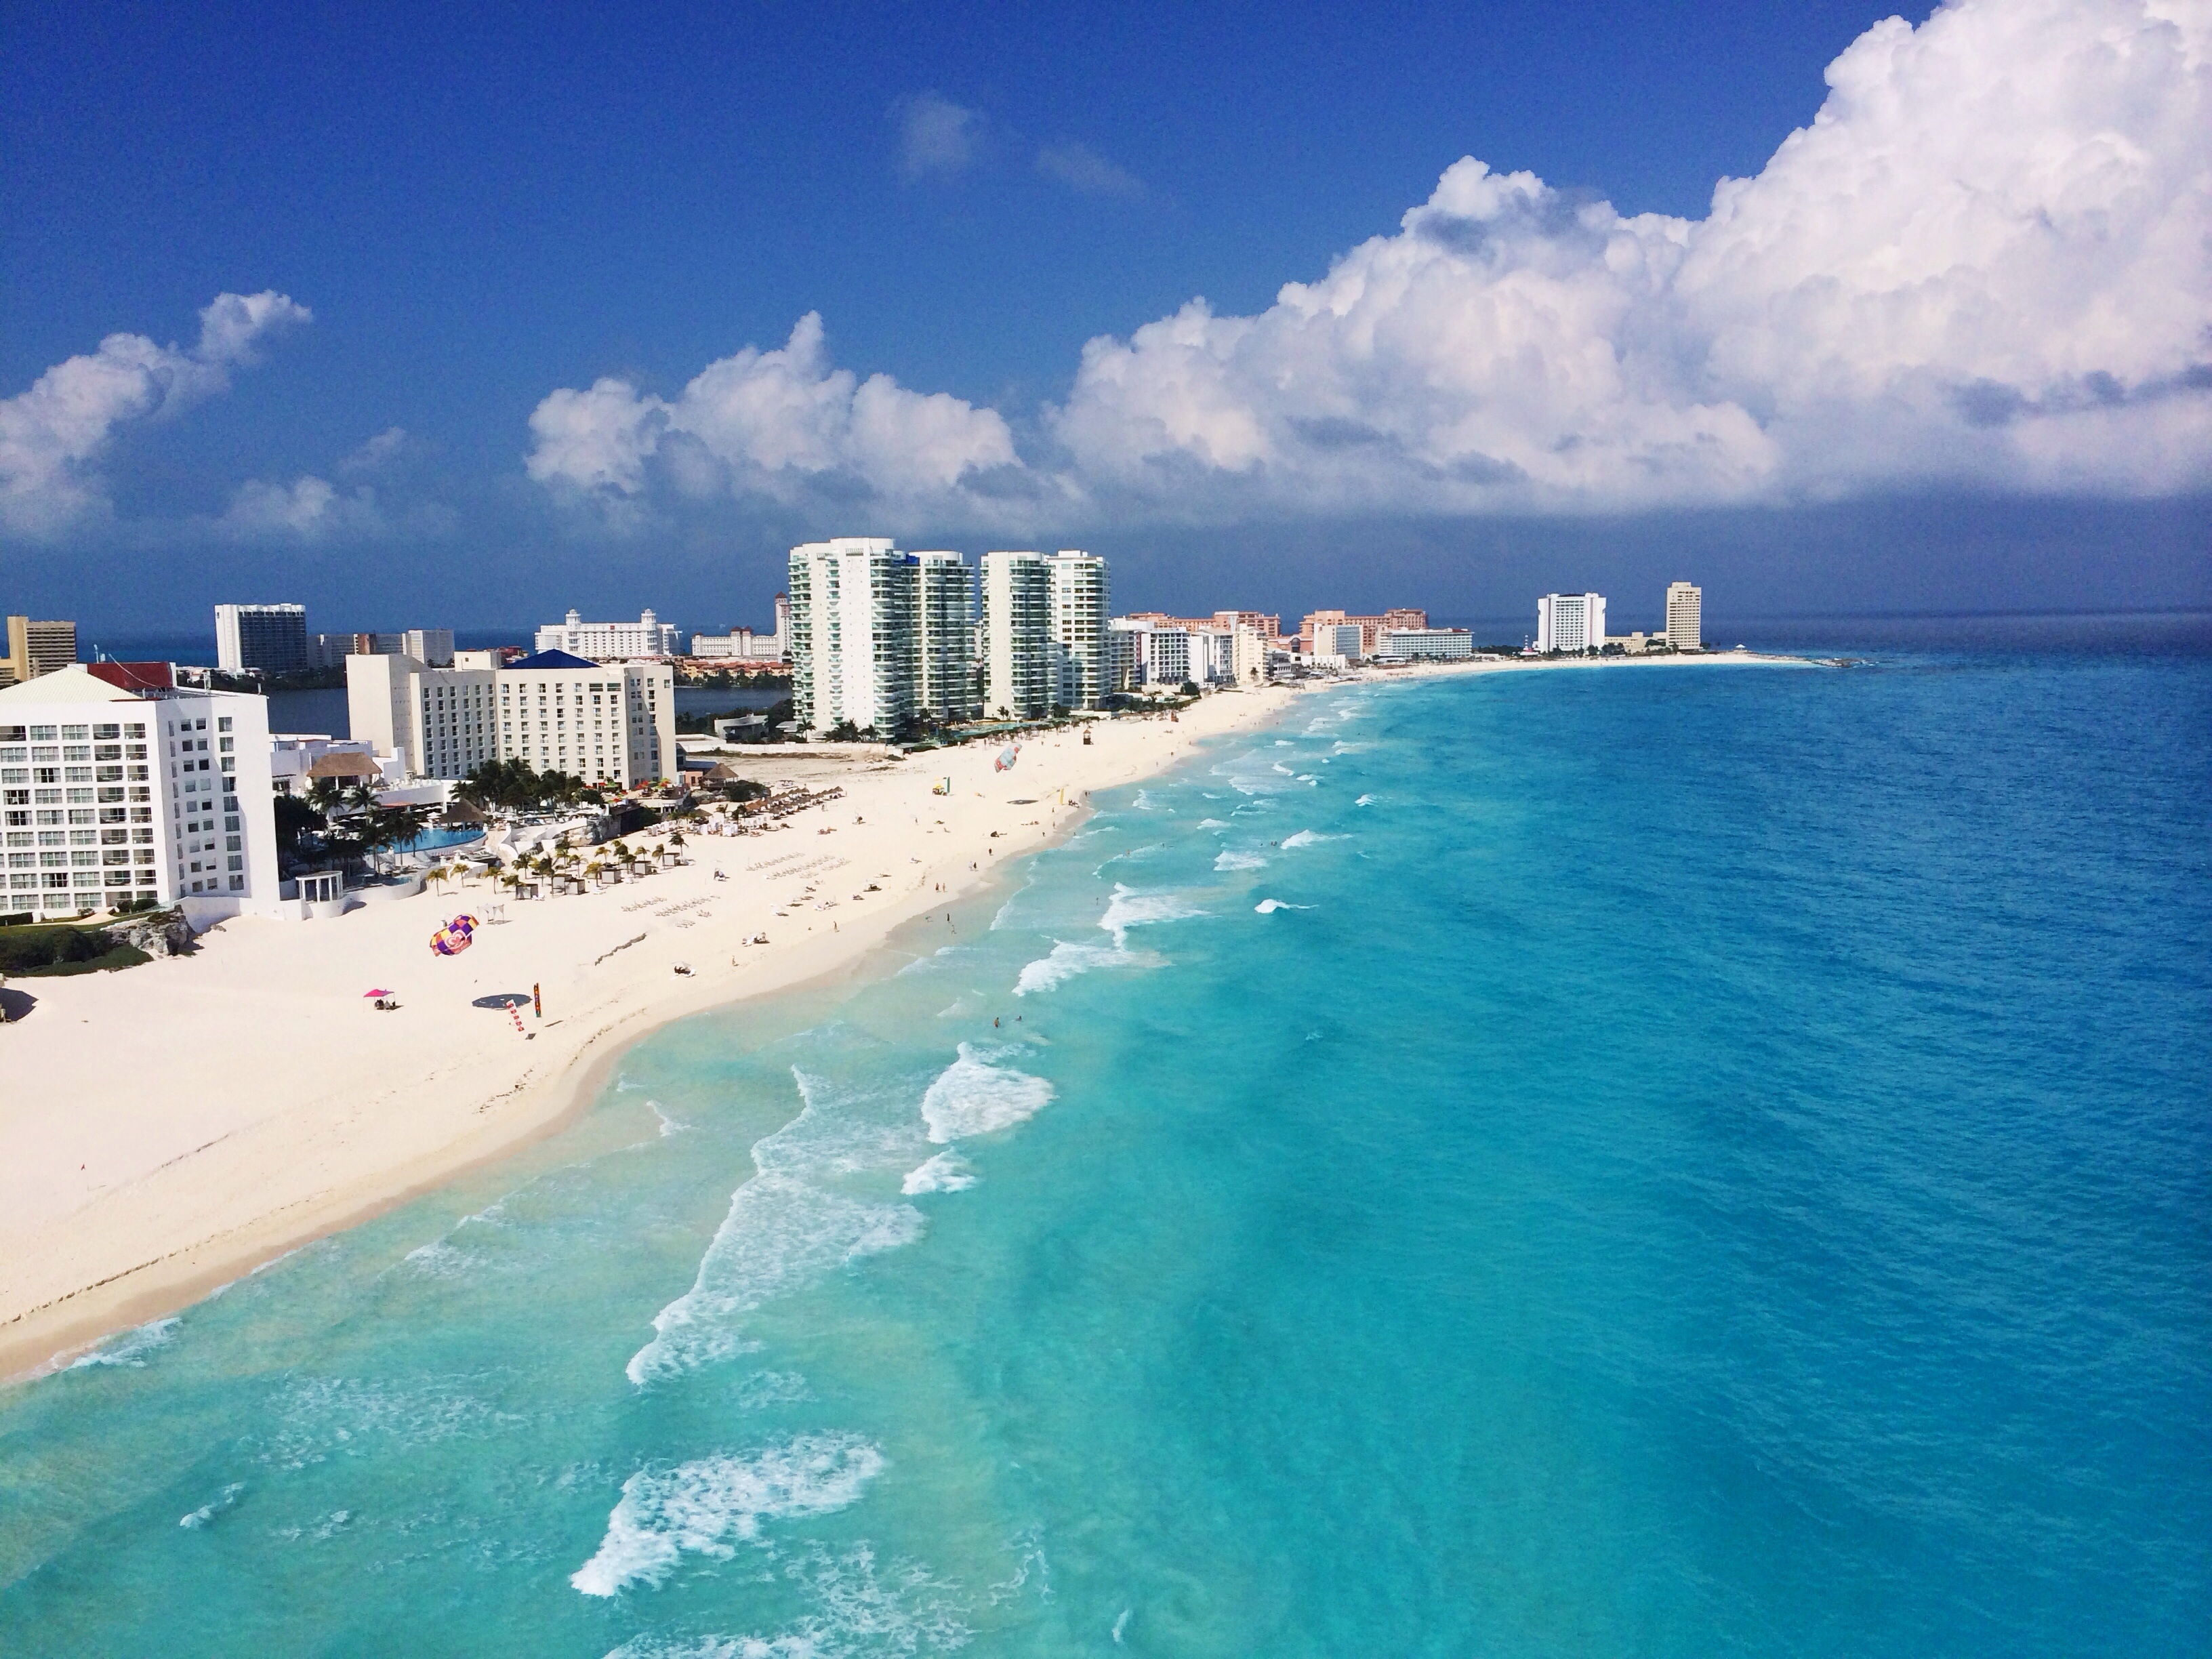 Cancun Mexico  Amazing Tourists Destination  Found The World